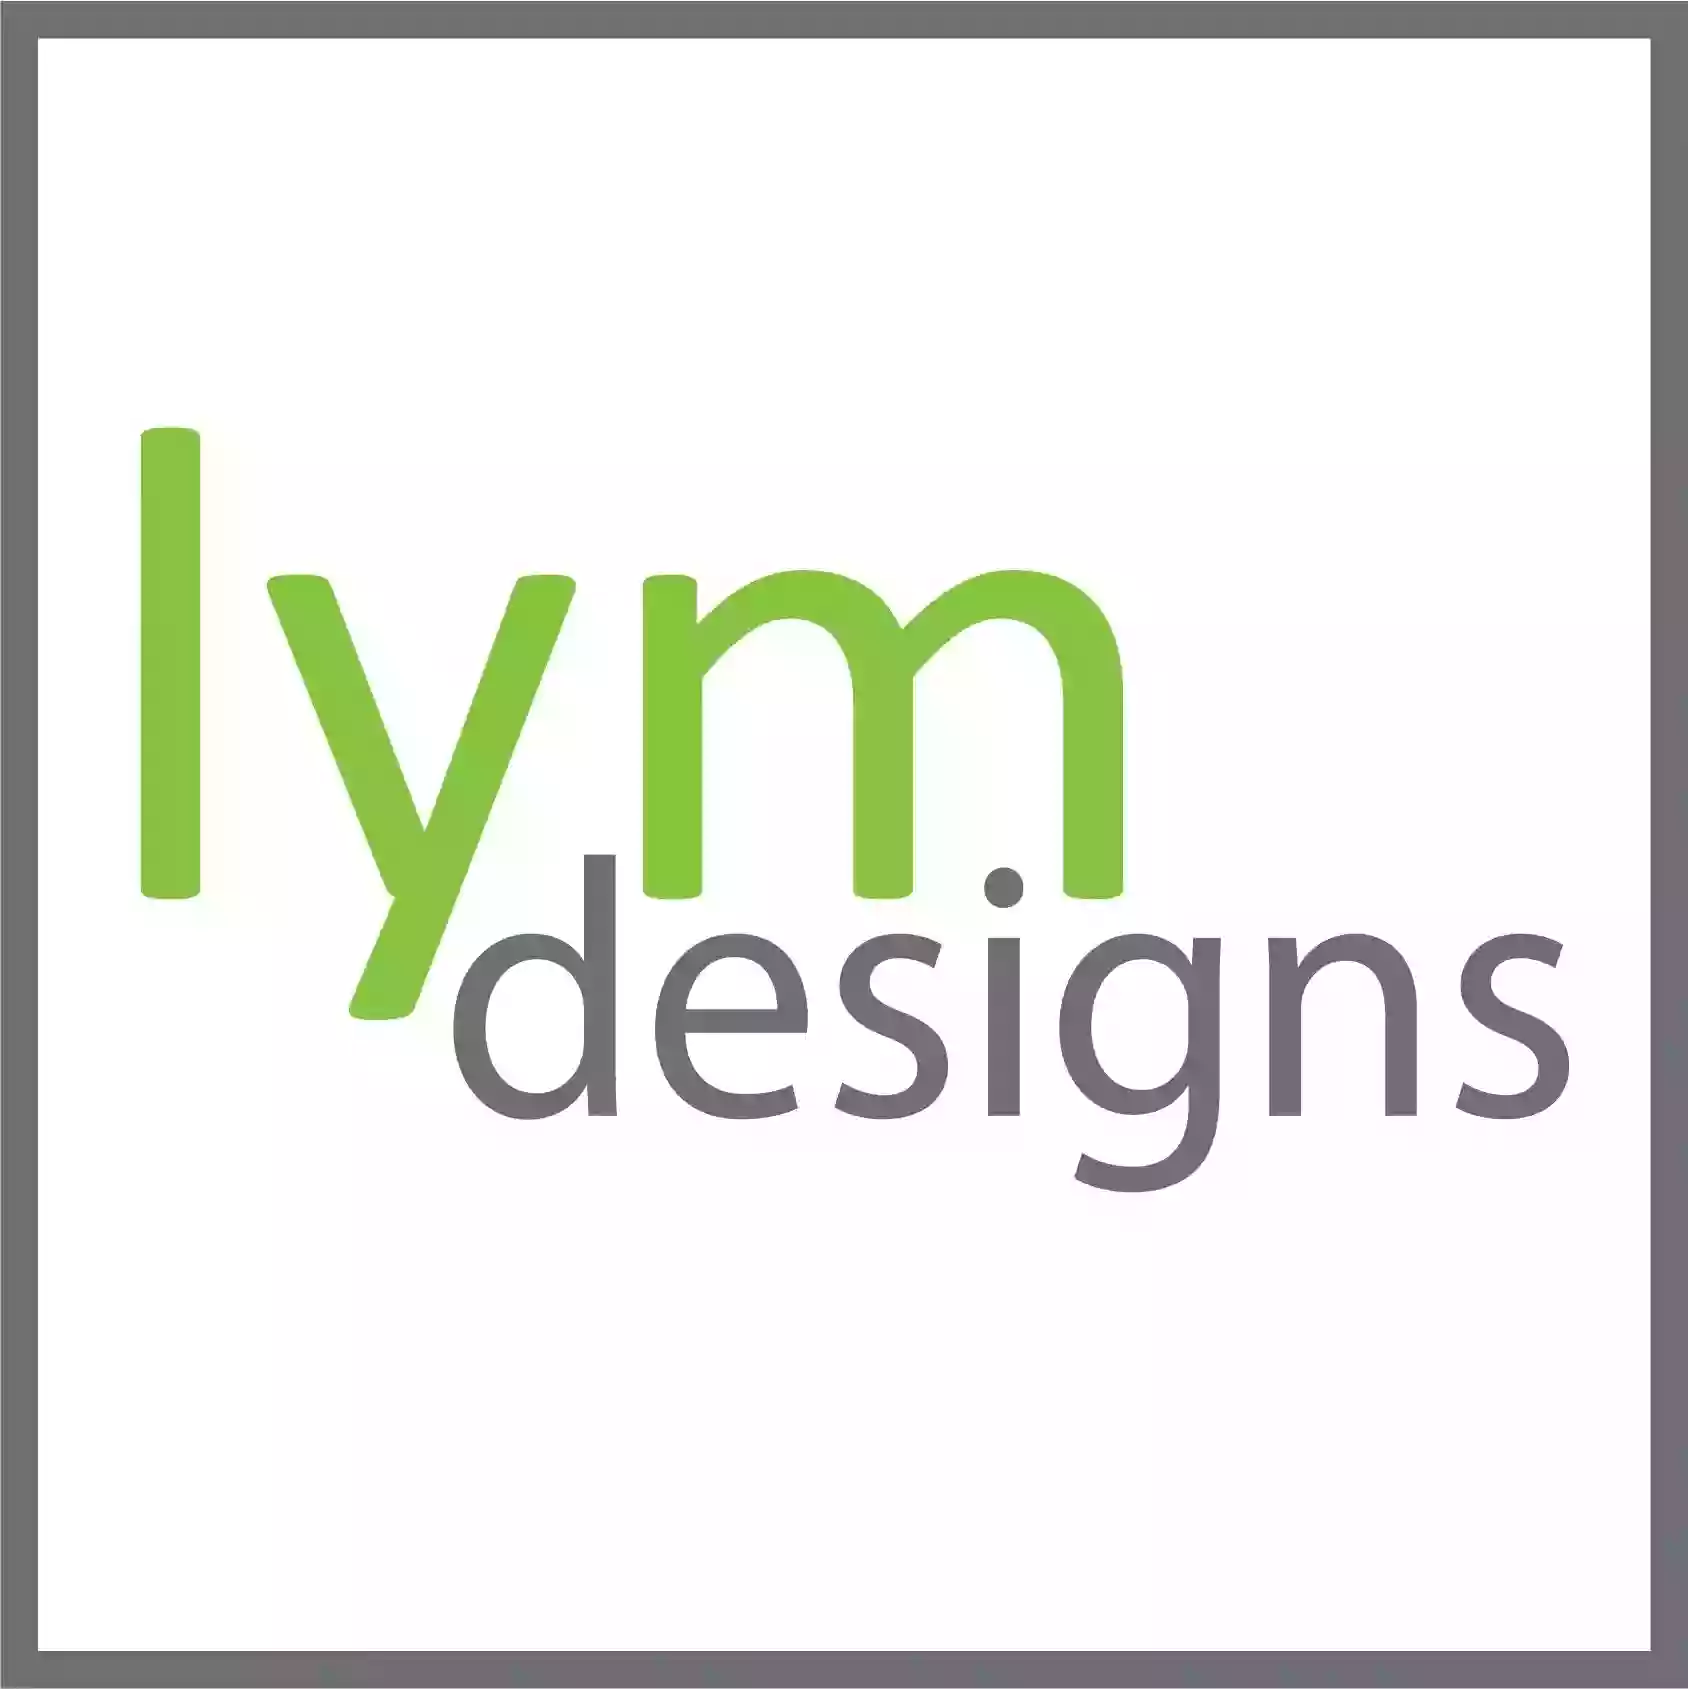 lym designs